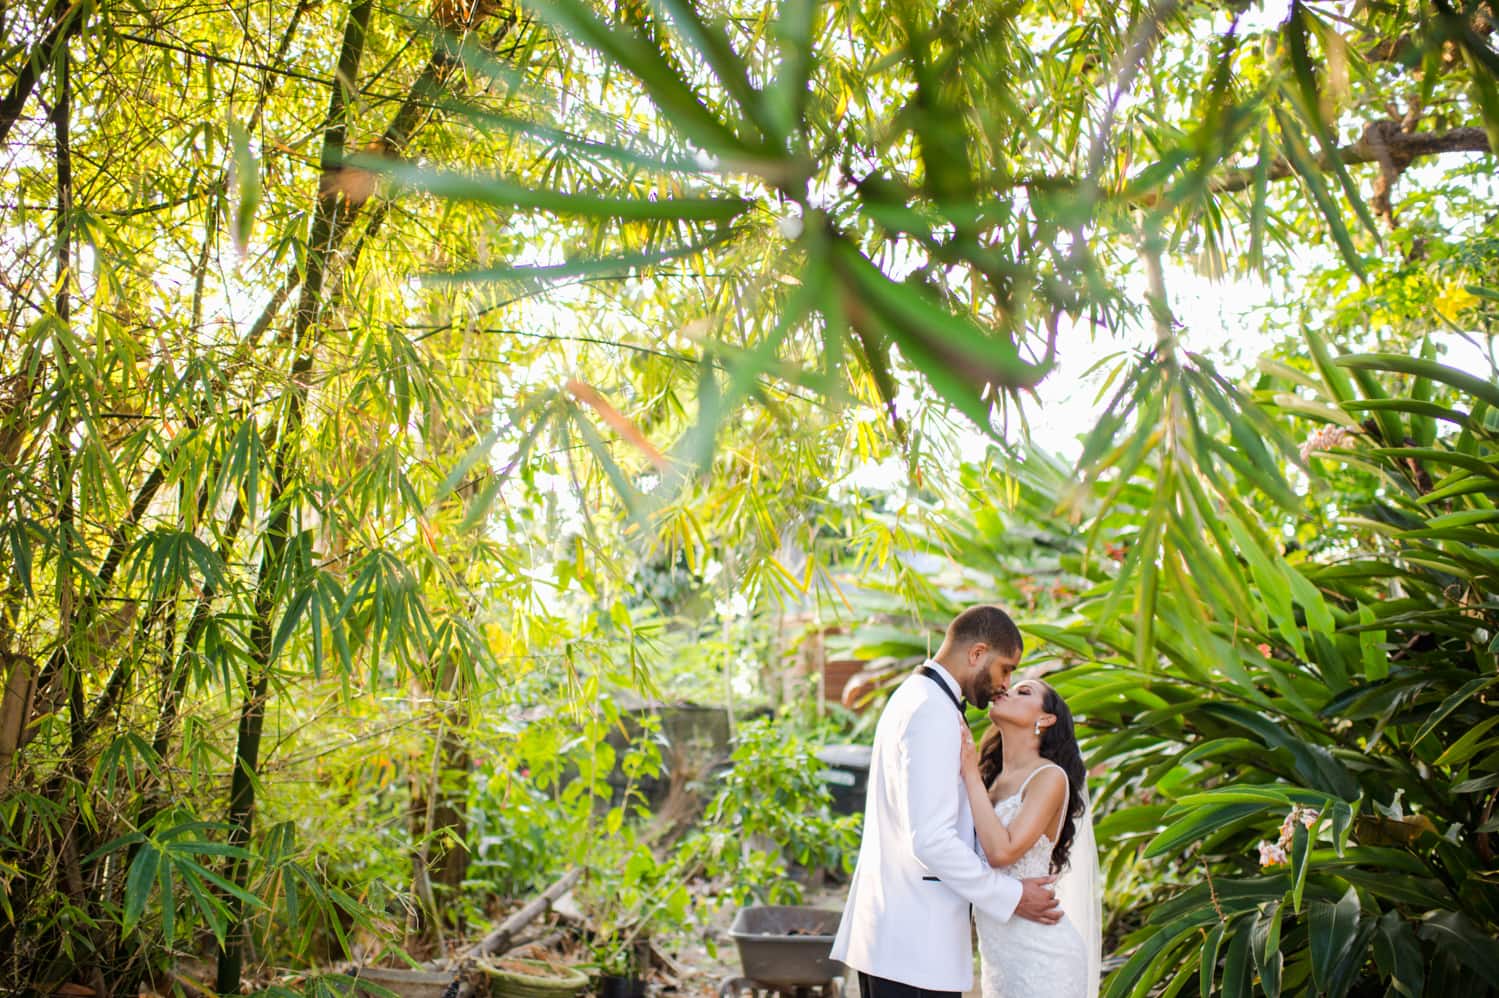 Caribbean rainforest elopement photos at Hacienda Siesta Alegre by Puerto Rico photographer Camille Fontanez